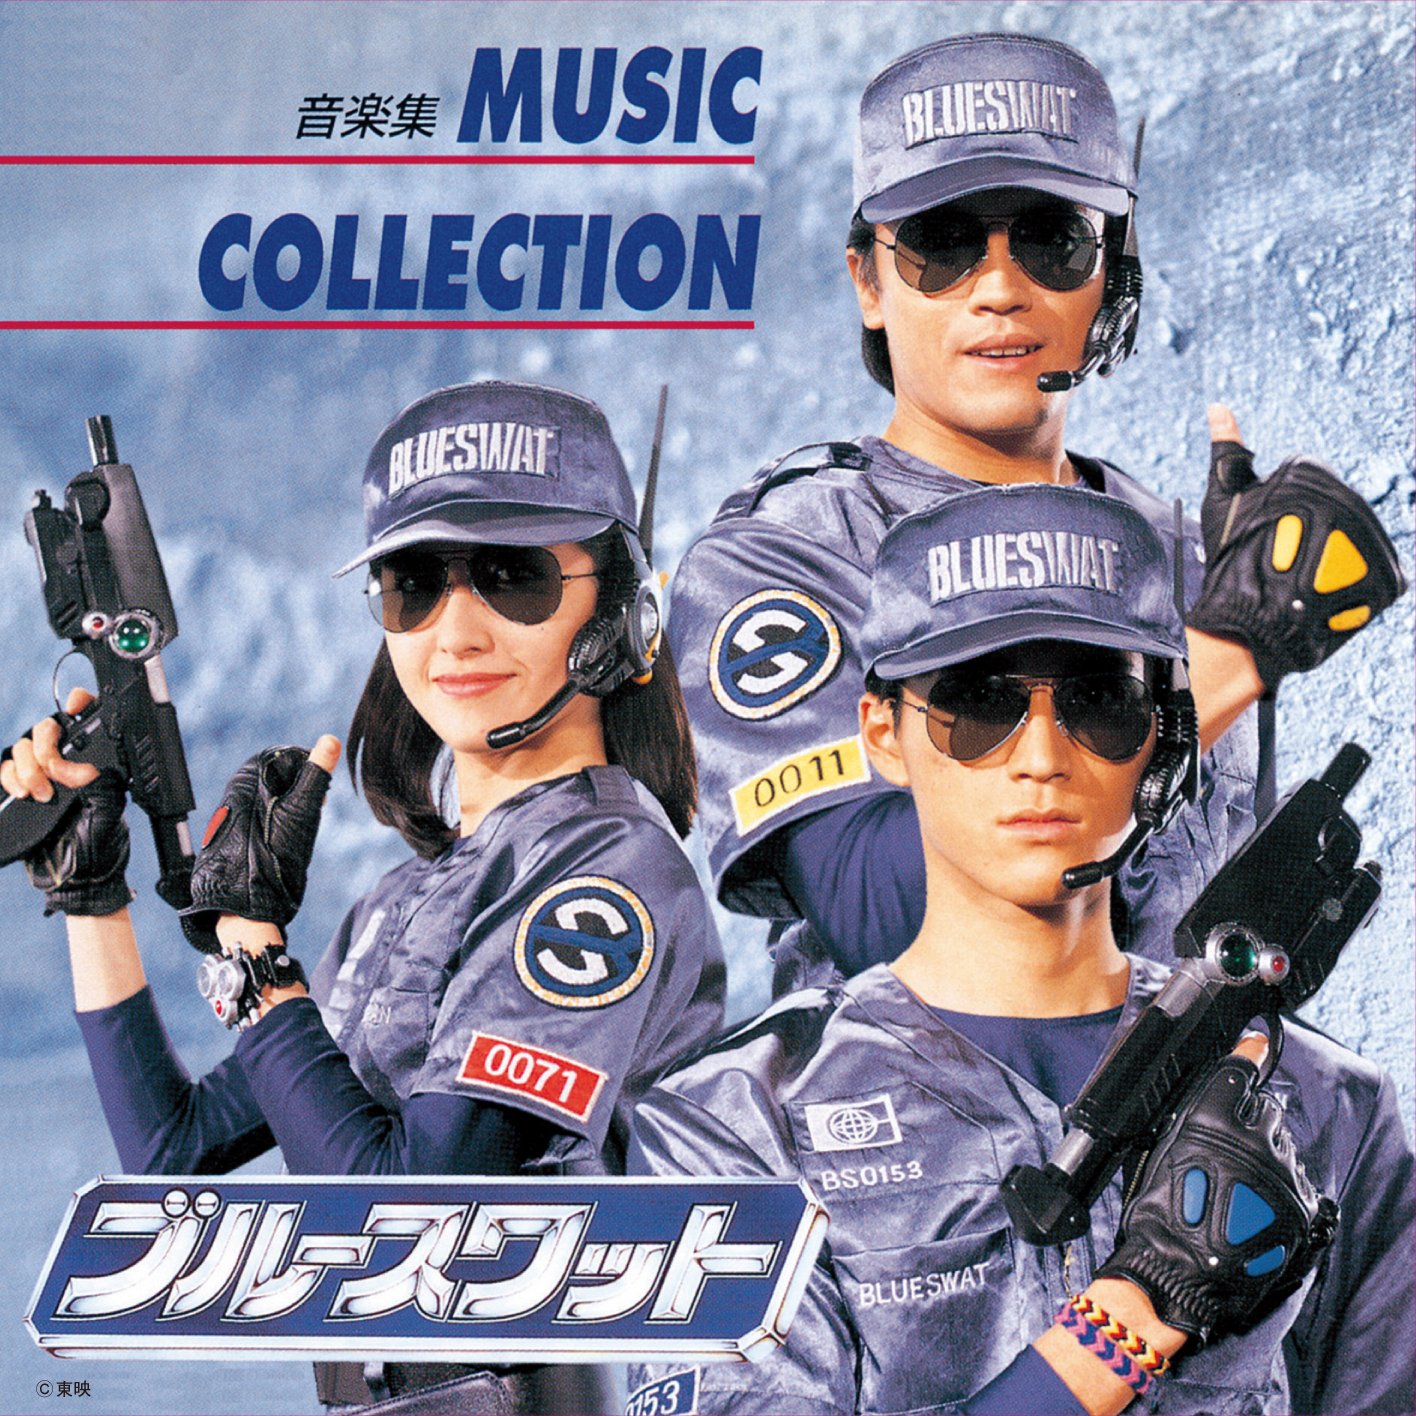 Collection музыка. SWAT Blue. Синий SWAT. SWAT музыка. SWAT Soundtrack.